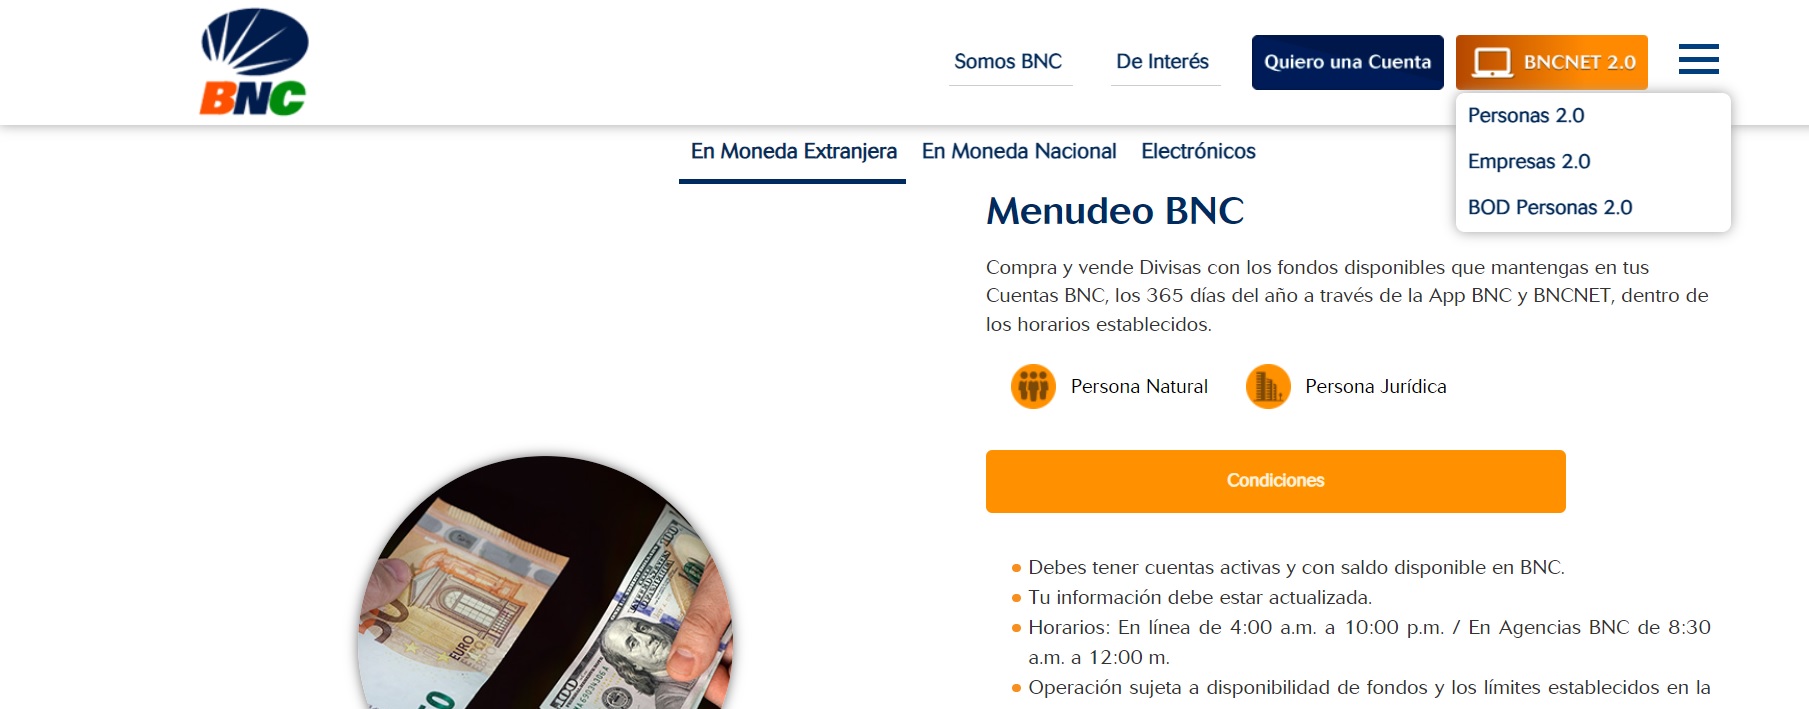 Banca electrónica: BNC net